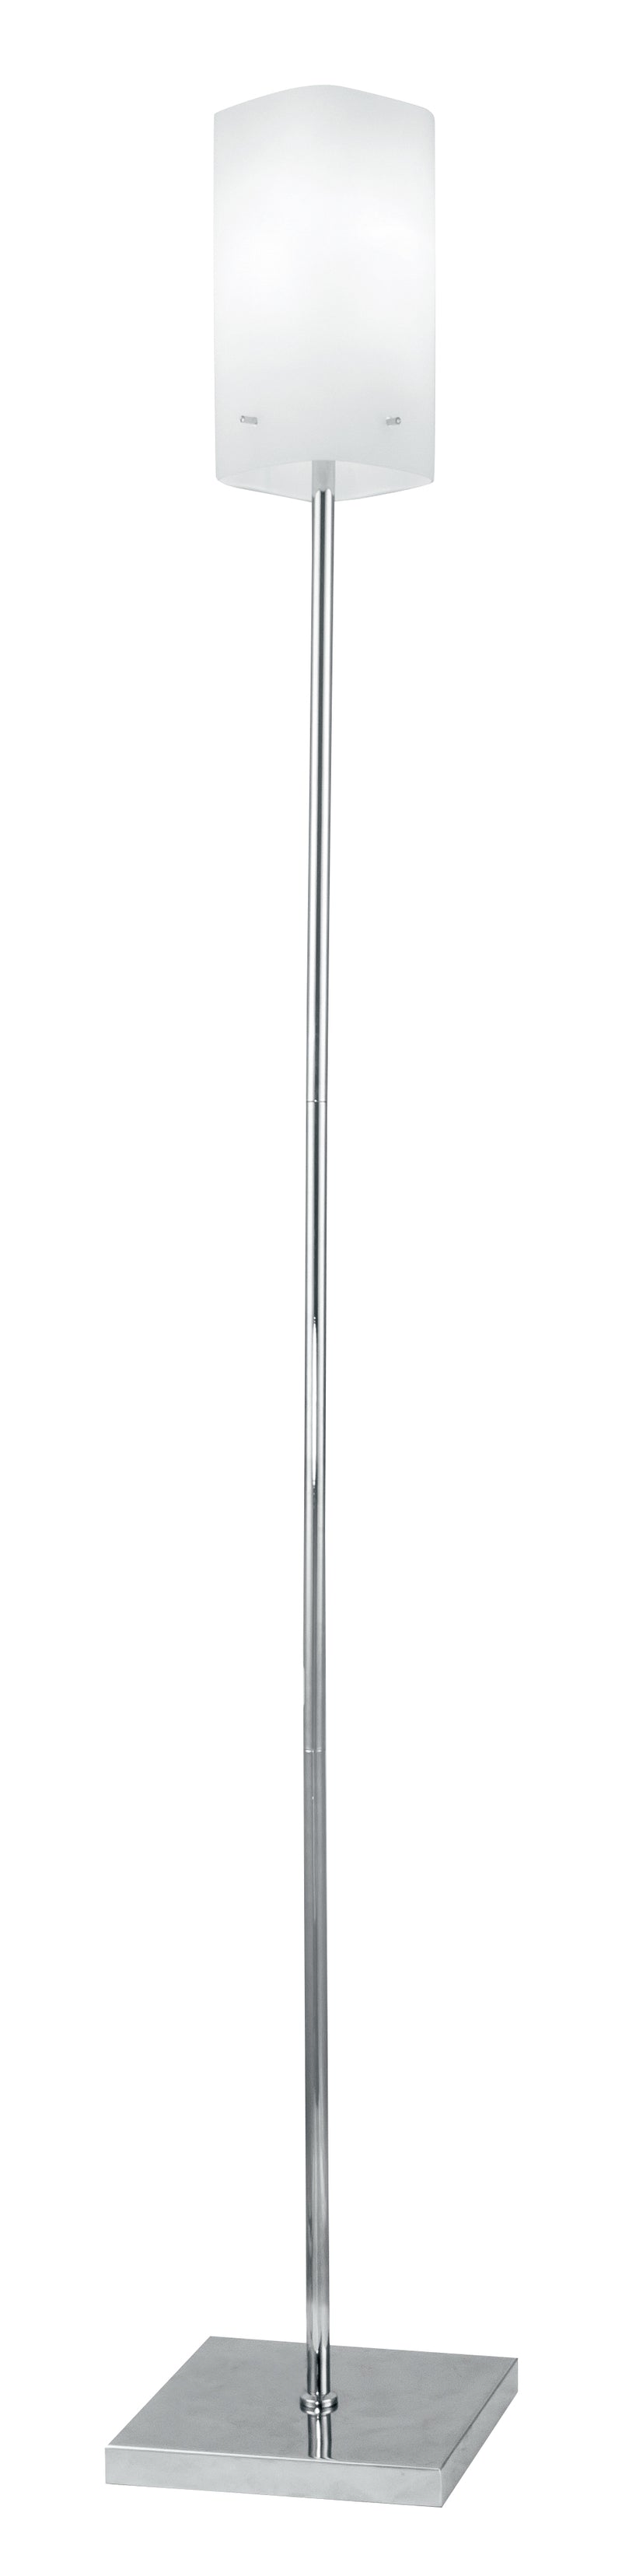 Piantana Metallo paralume Vetro Bianco Lampada da Terra Moderna E27 –  acquista su Giordano Shop